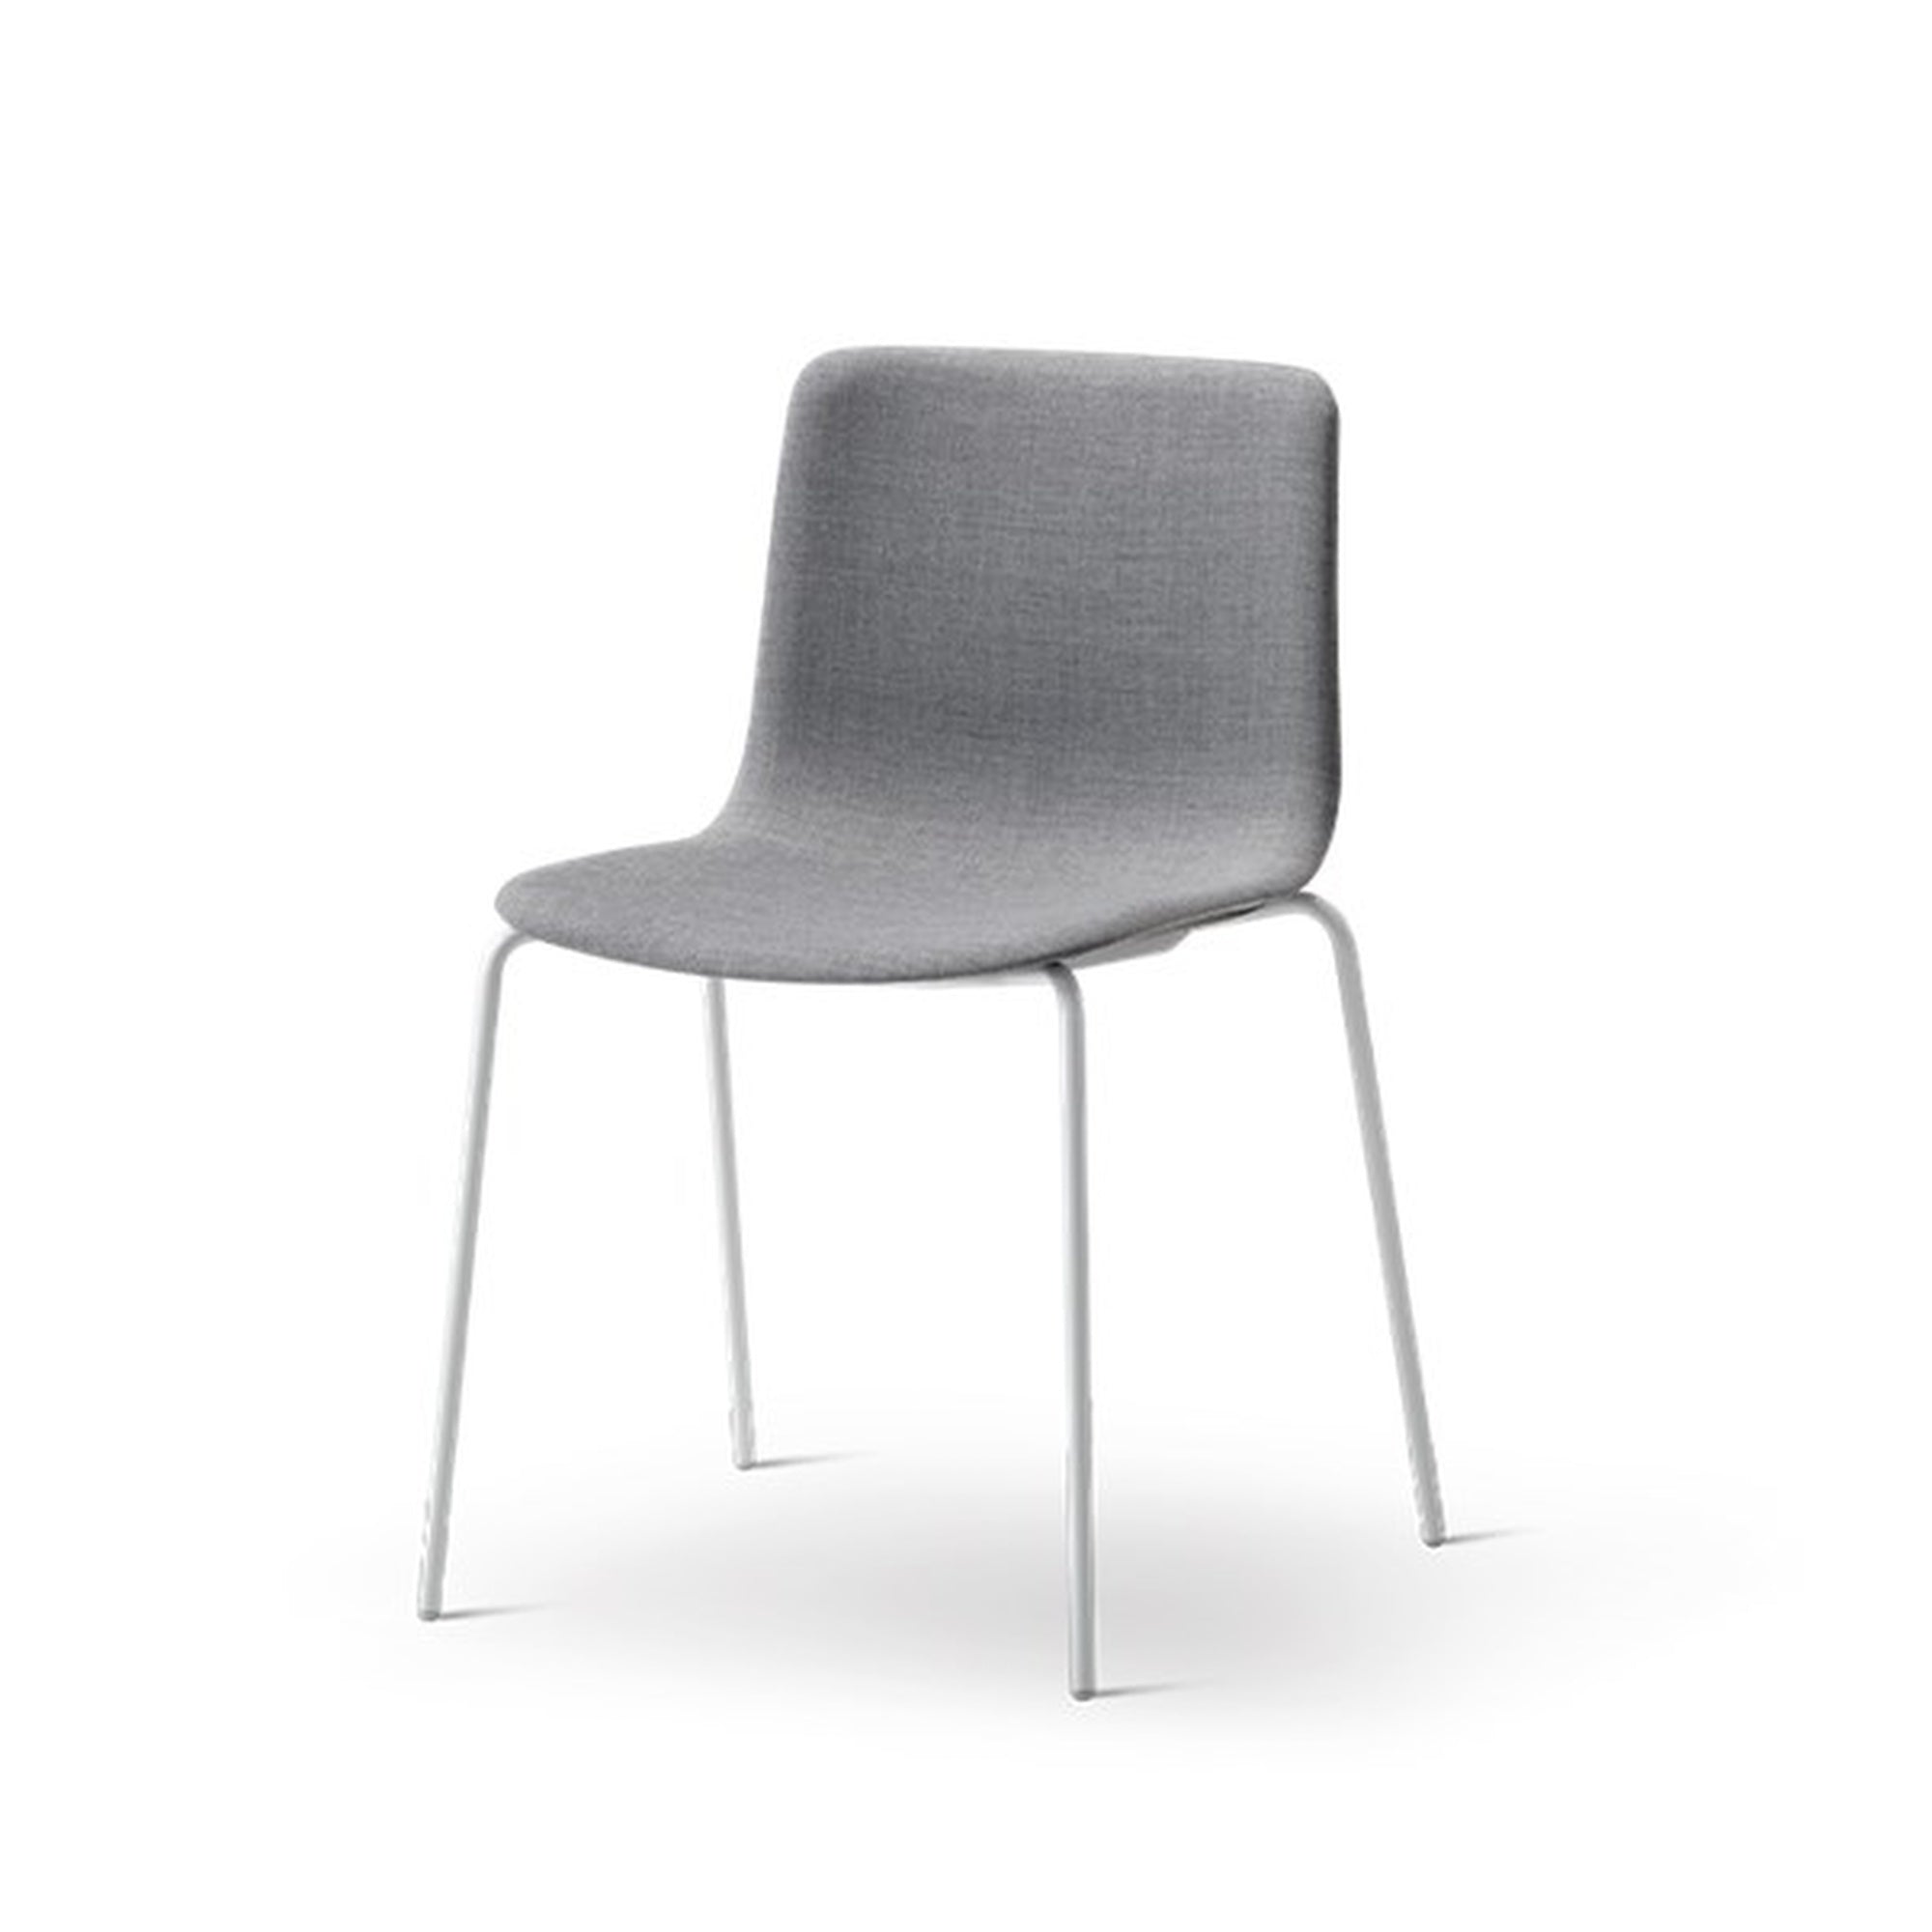 Pato 4-leg Chair Upholstered